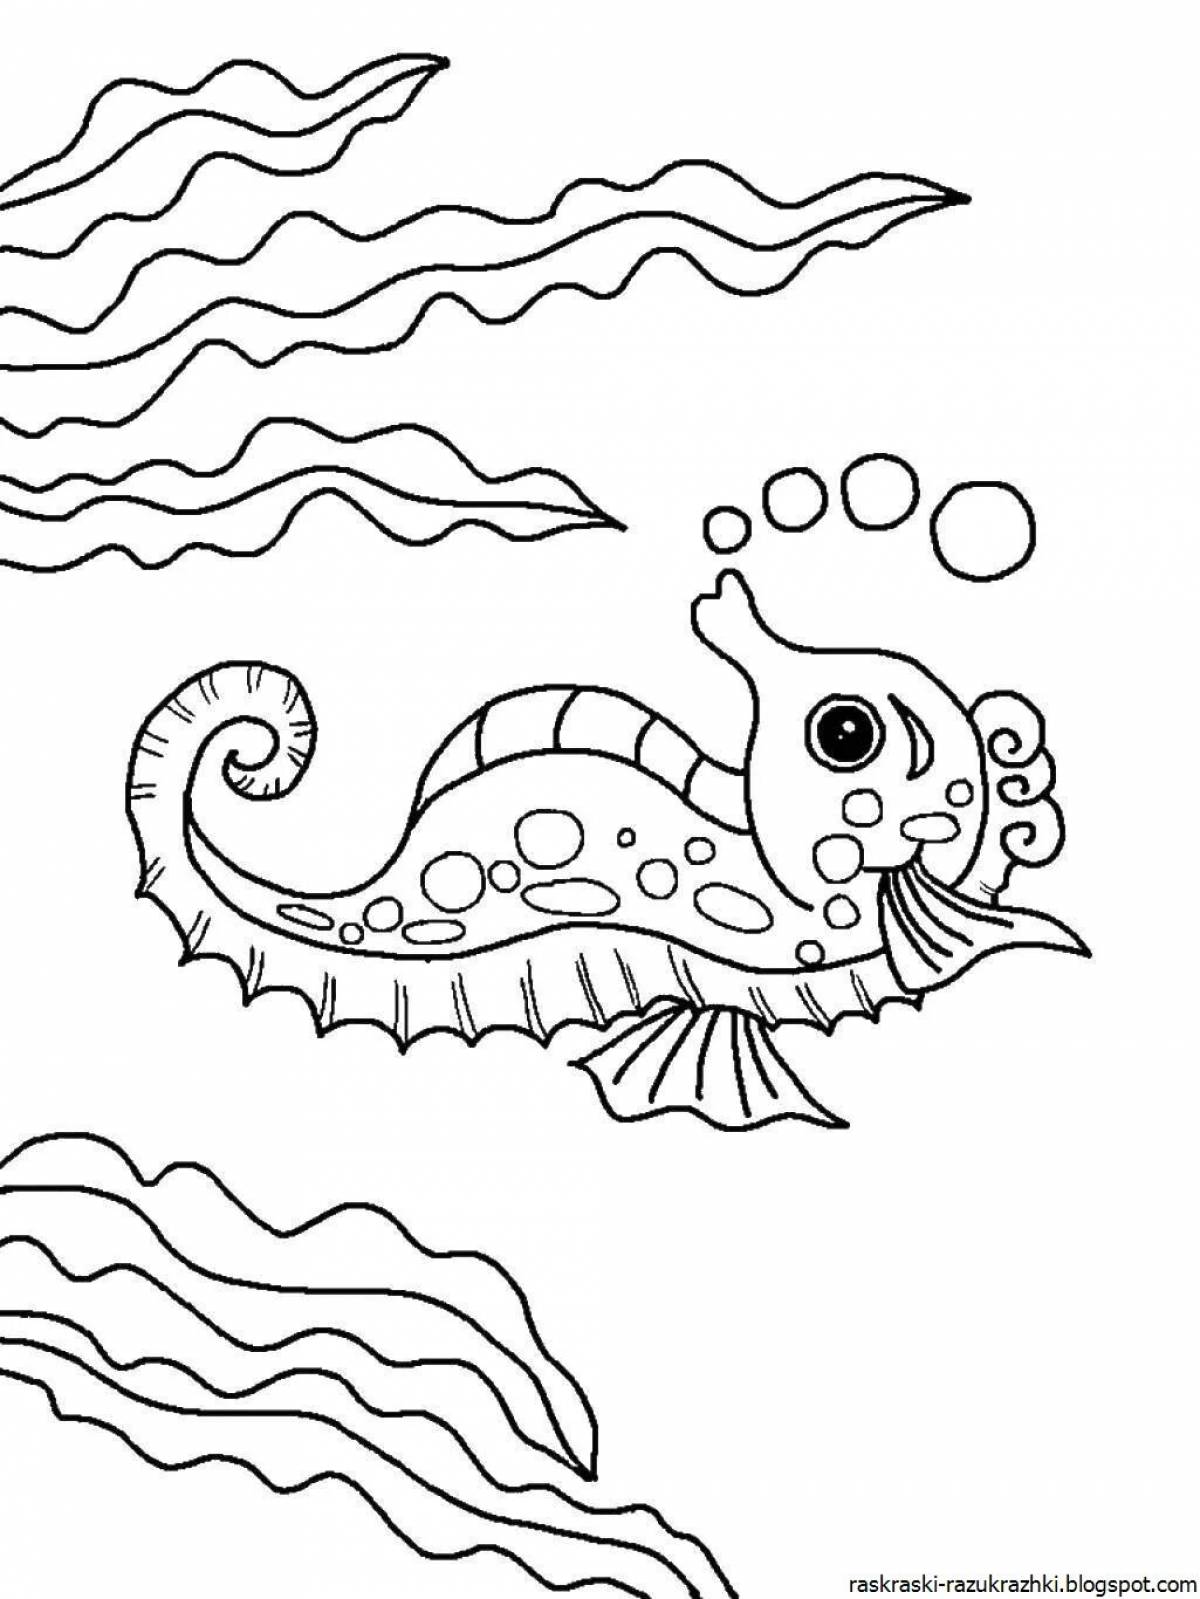 Amazing ocean coloring book for kids